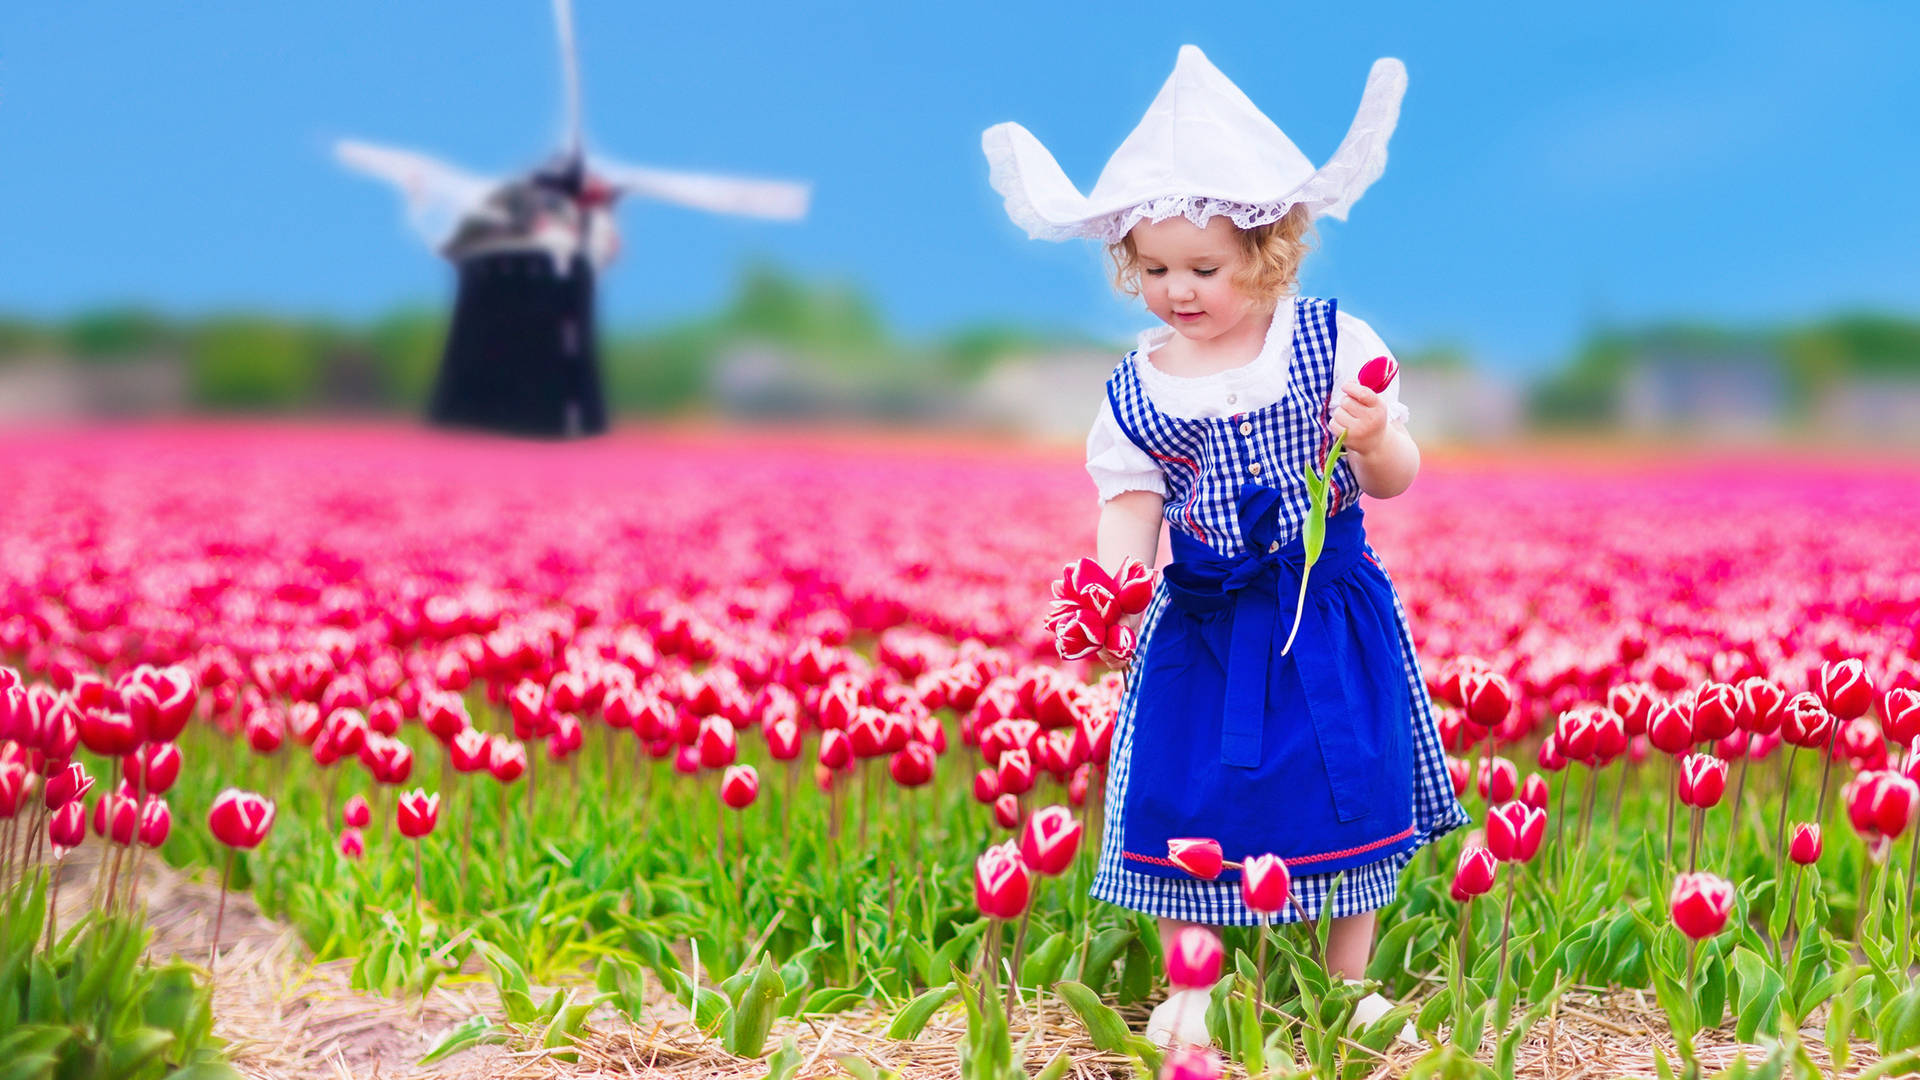 Child In Keukenhof Garden With Pink Tulips Background